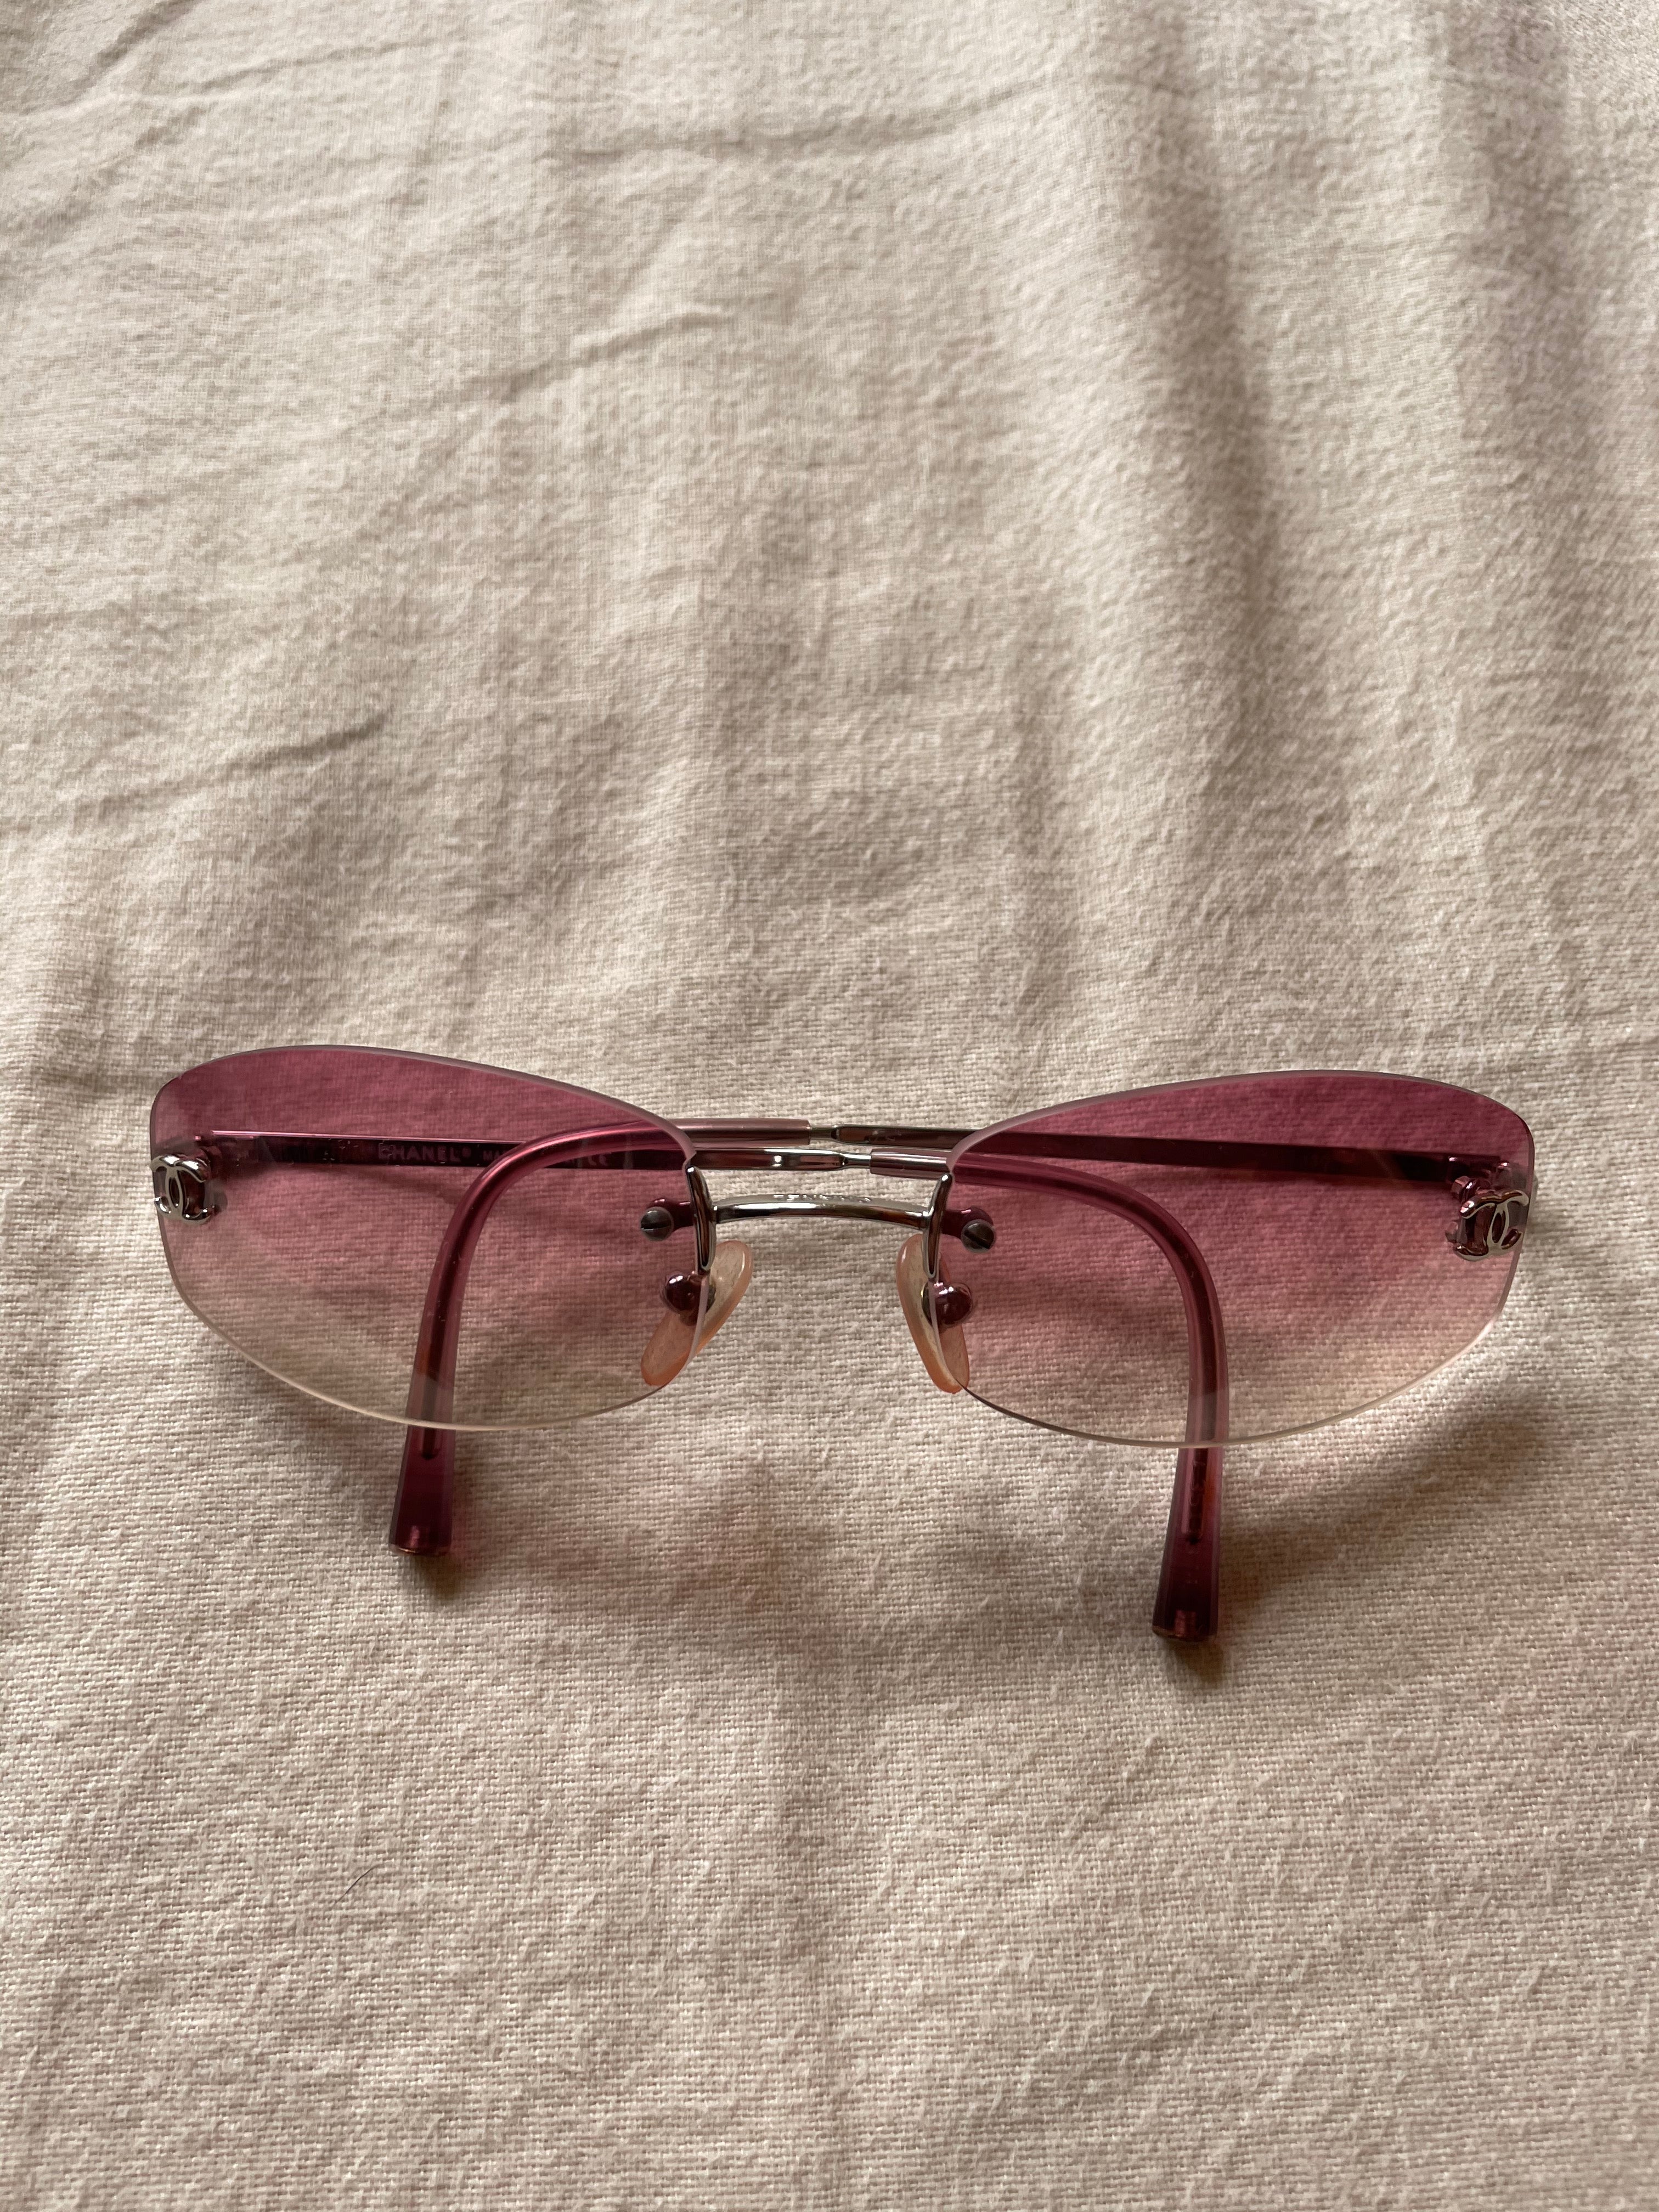 Chanel Vintage Rimless Sunglasses Pink